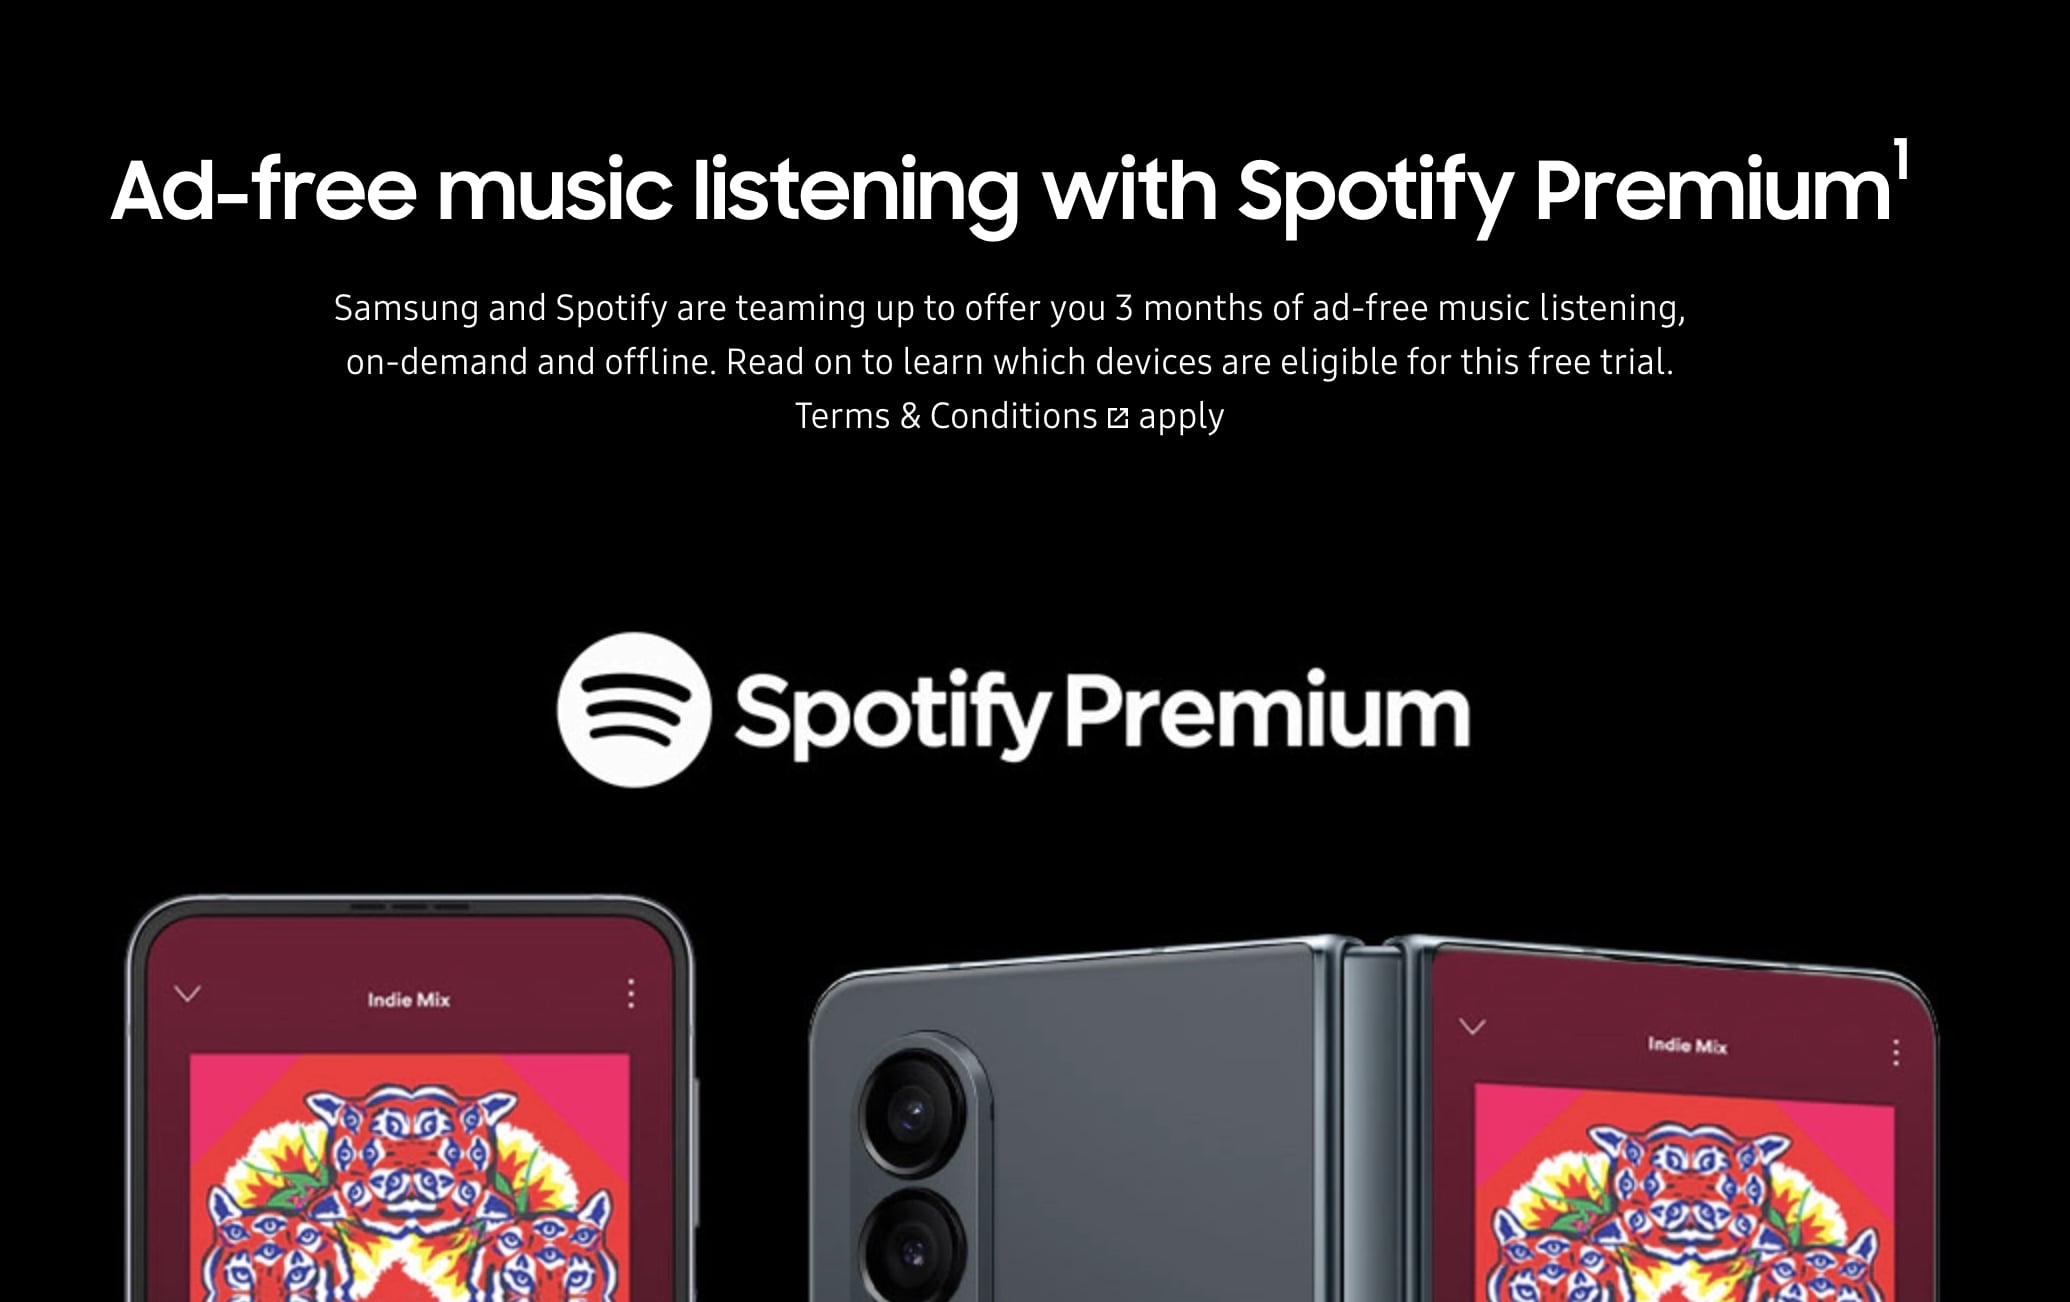  Get-Spotify-Premium-Samsung  